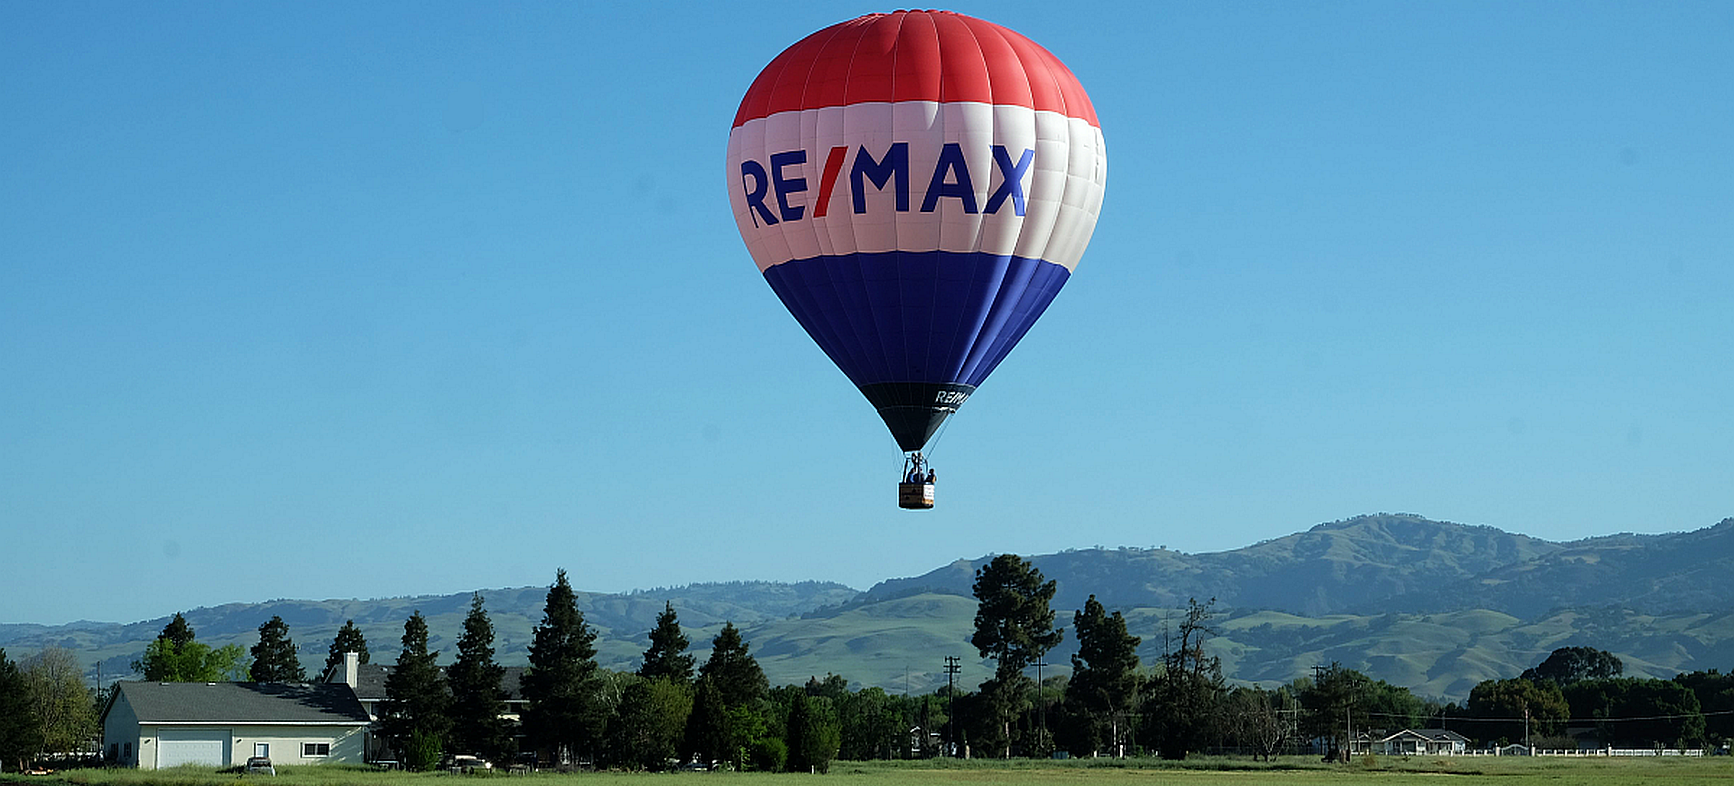 RE/MAX Balloon - Northern California